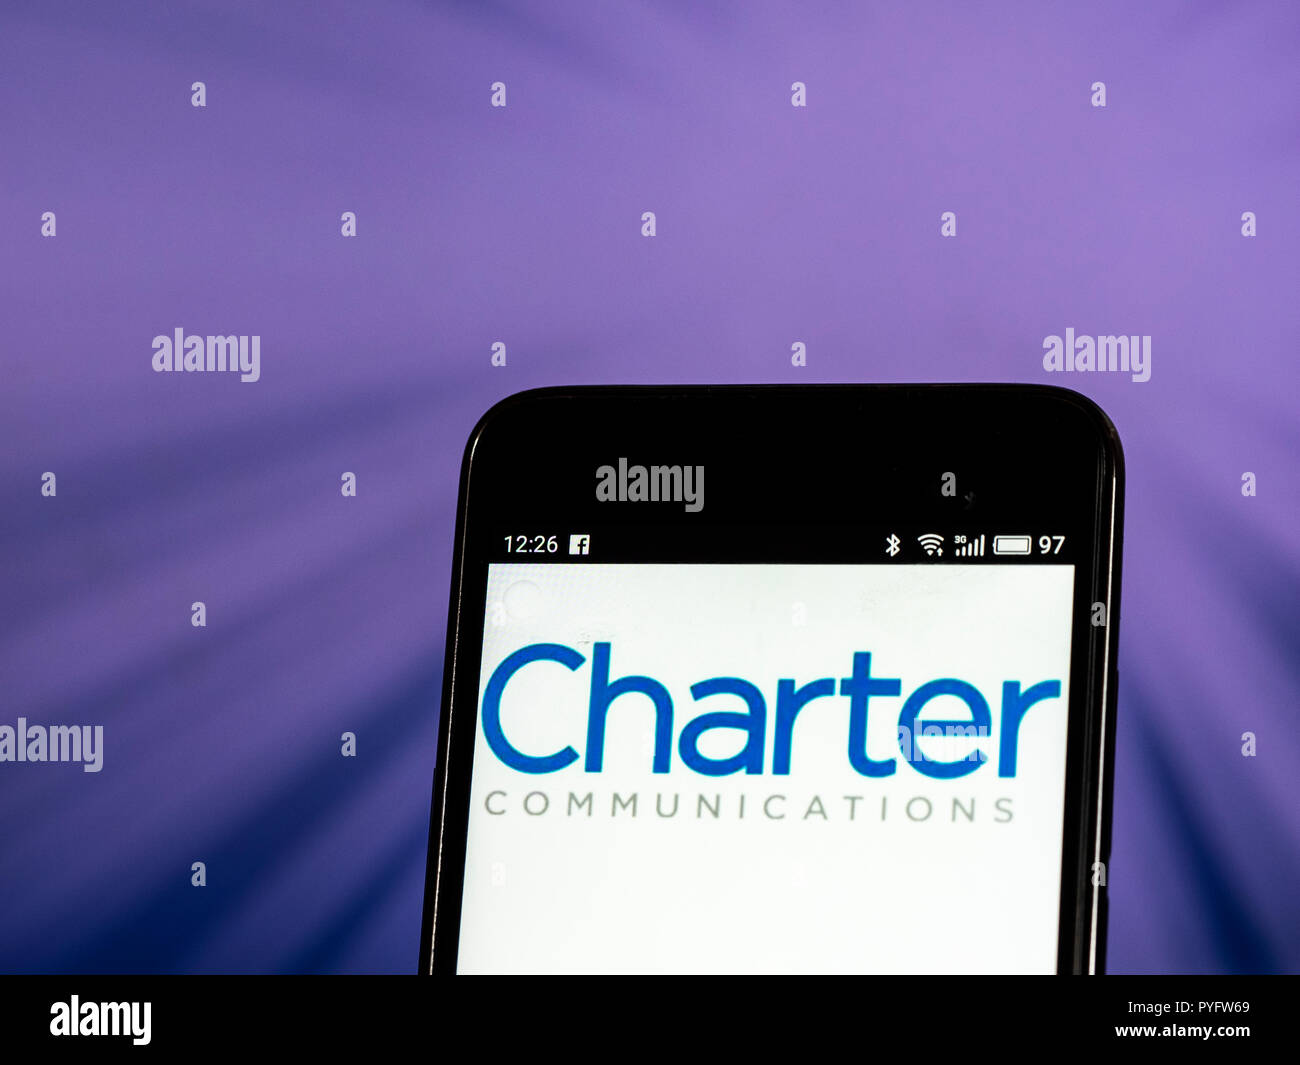 charter communications phone service